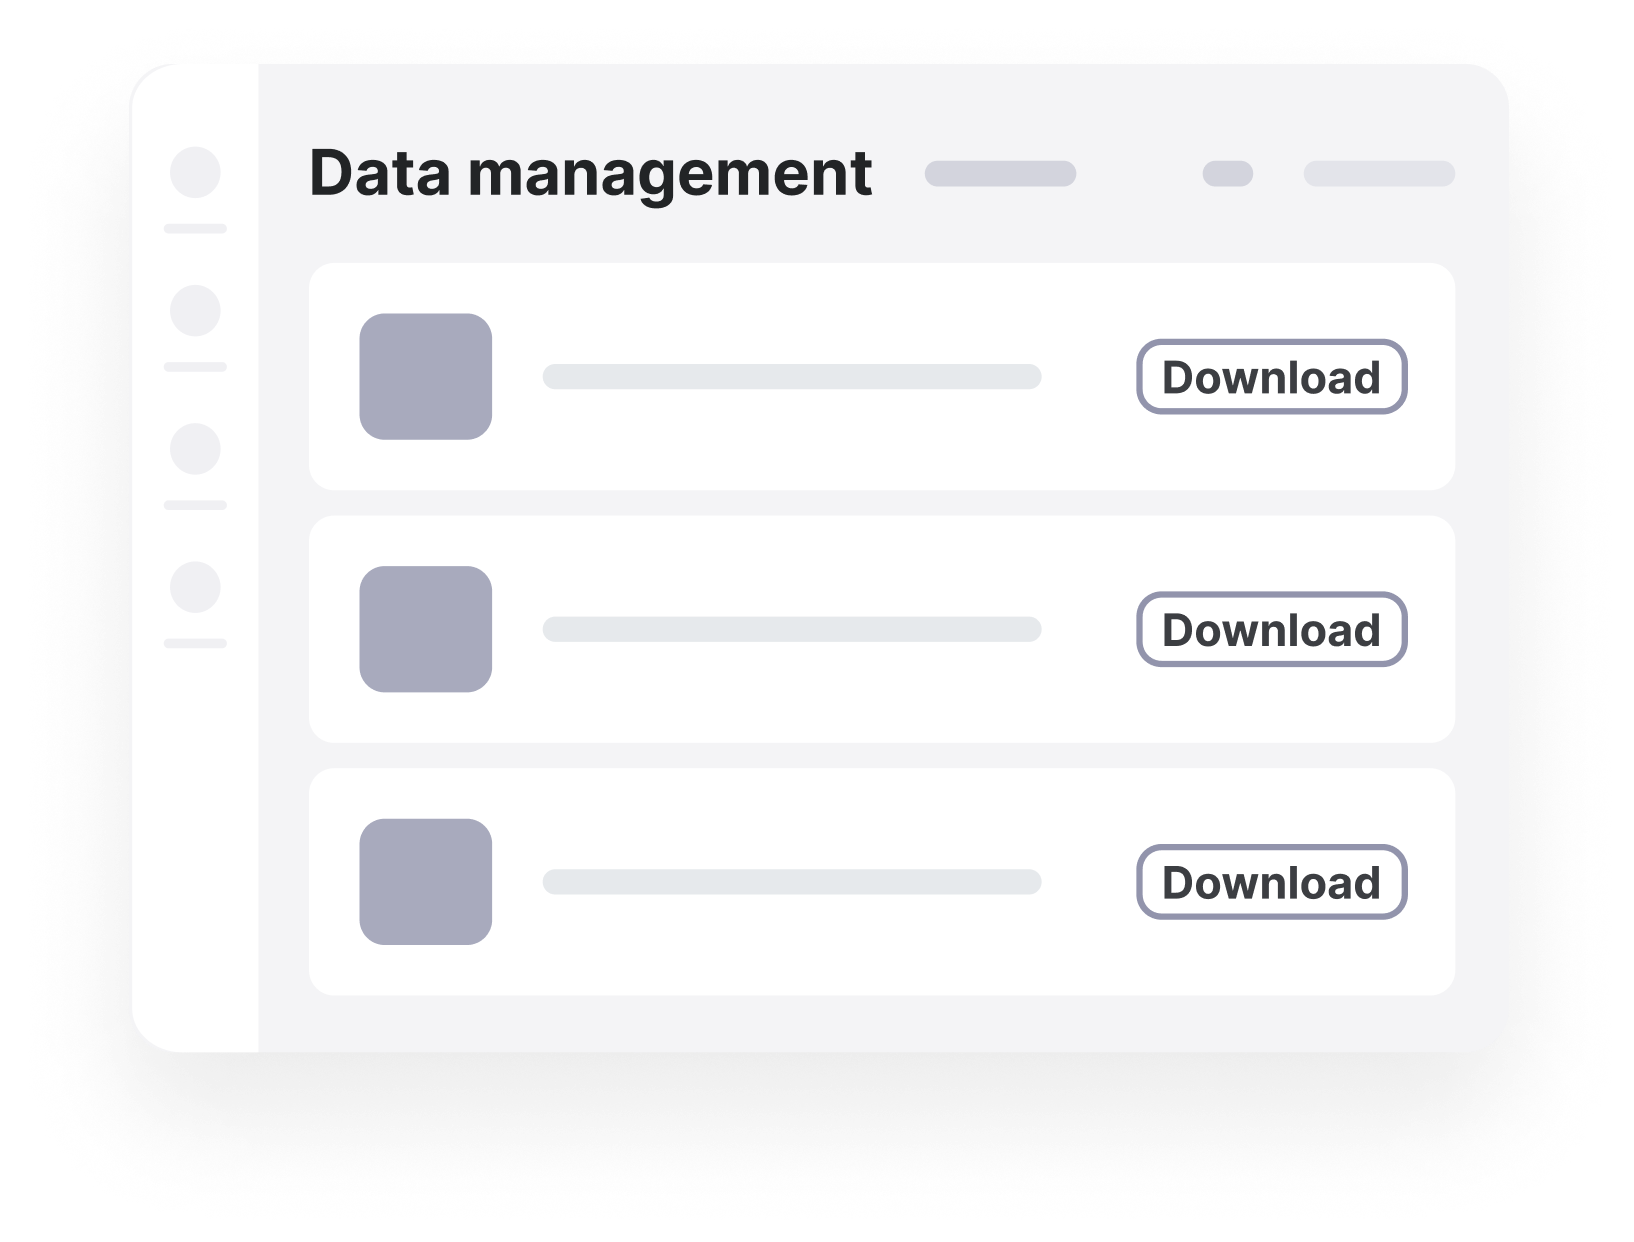 Data Management- Option 1